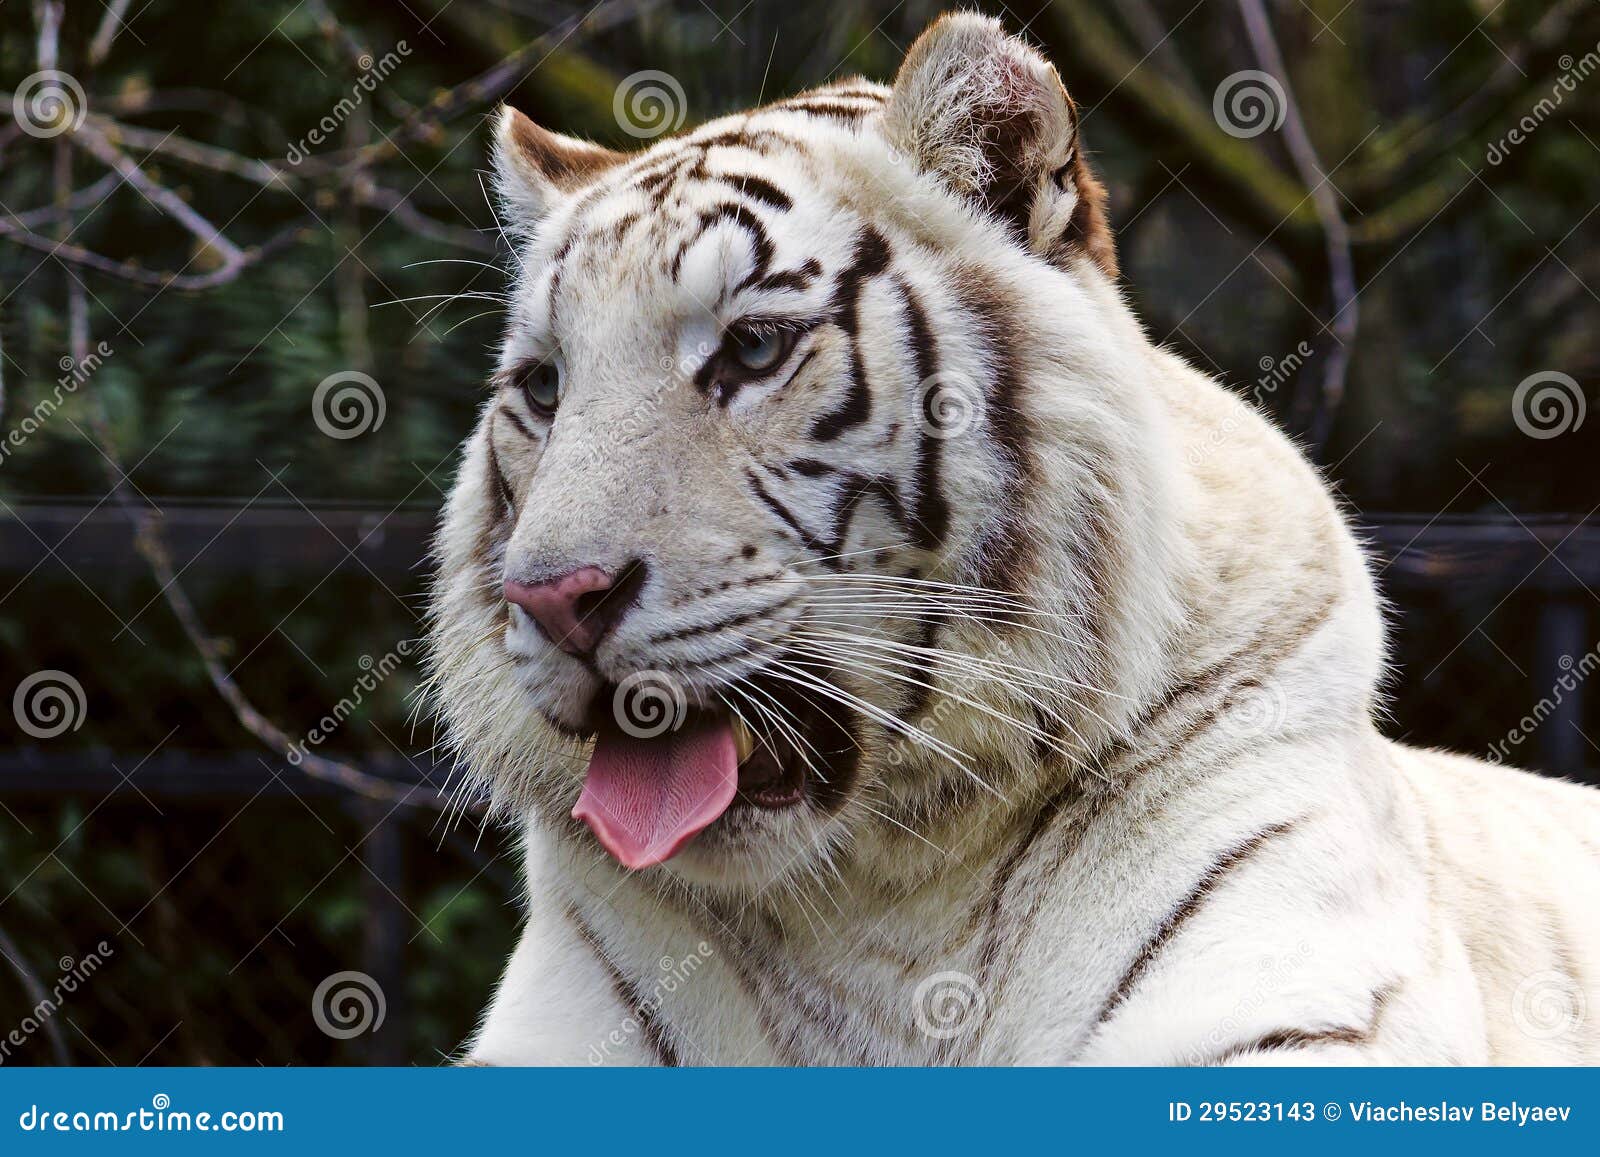 white bengal tigress